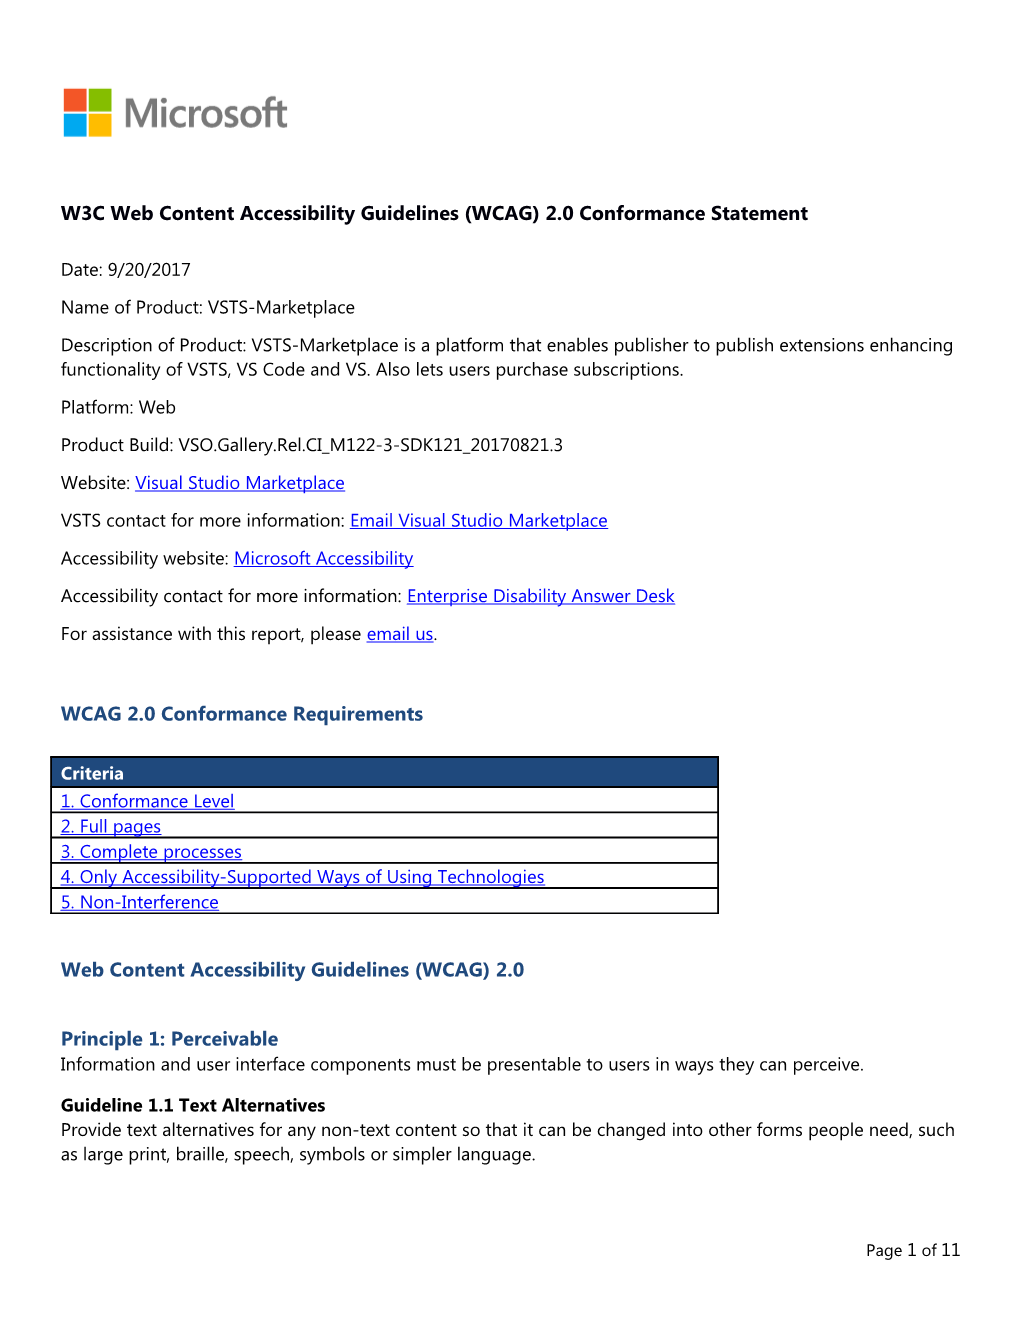 W3C Web Content Accessibility Guidelines (WCAG) 2.0 Conformance Statement s7